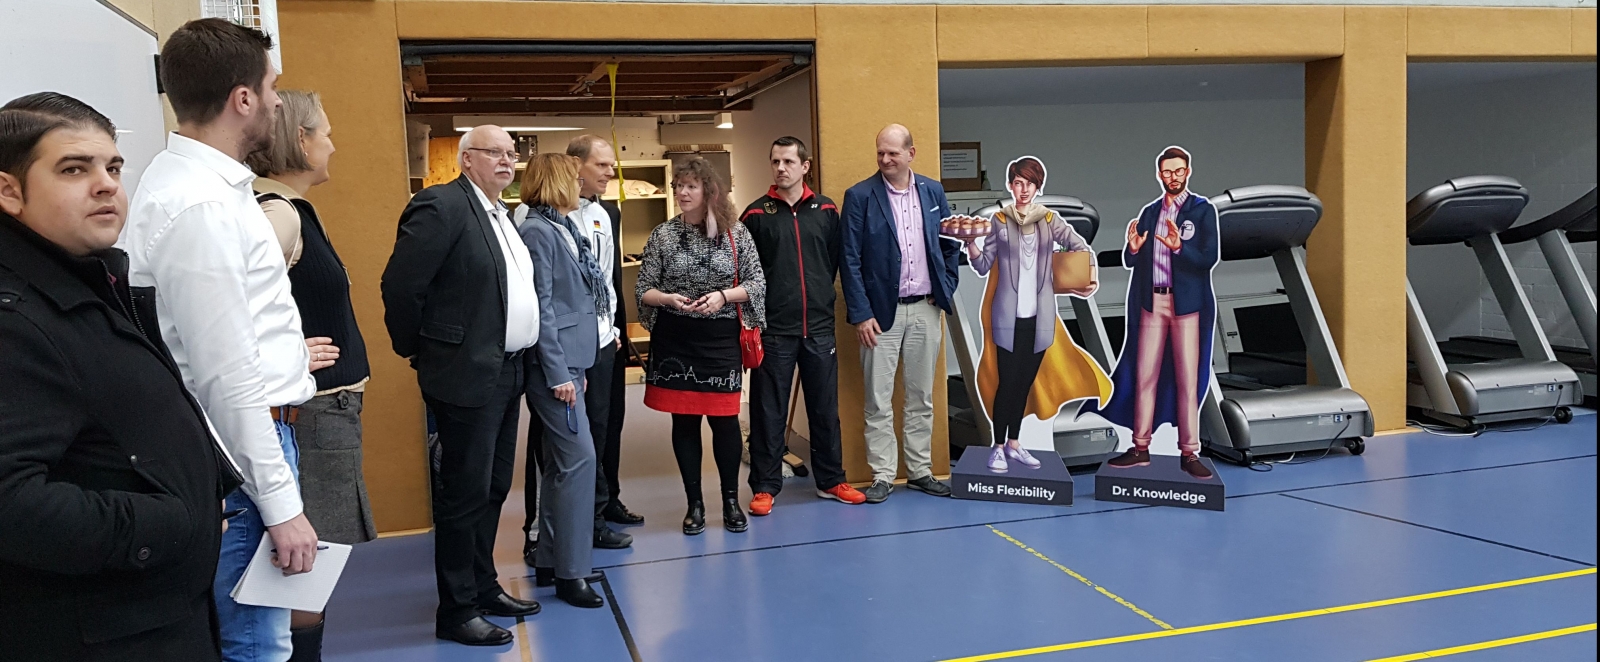 Staatssekretärin Andrea Milz besucht einen Badminton Verein.